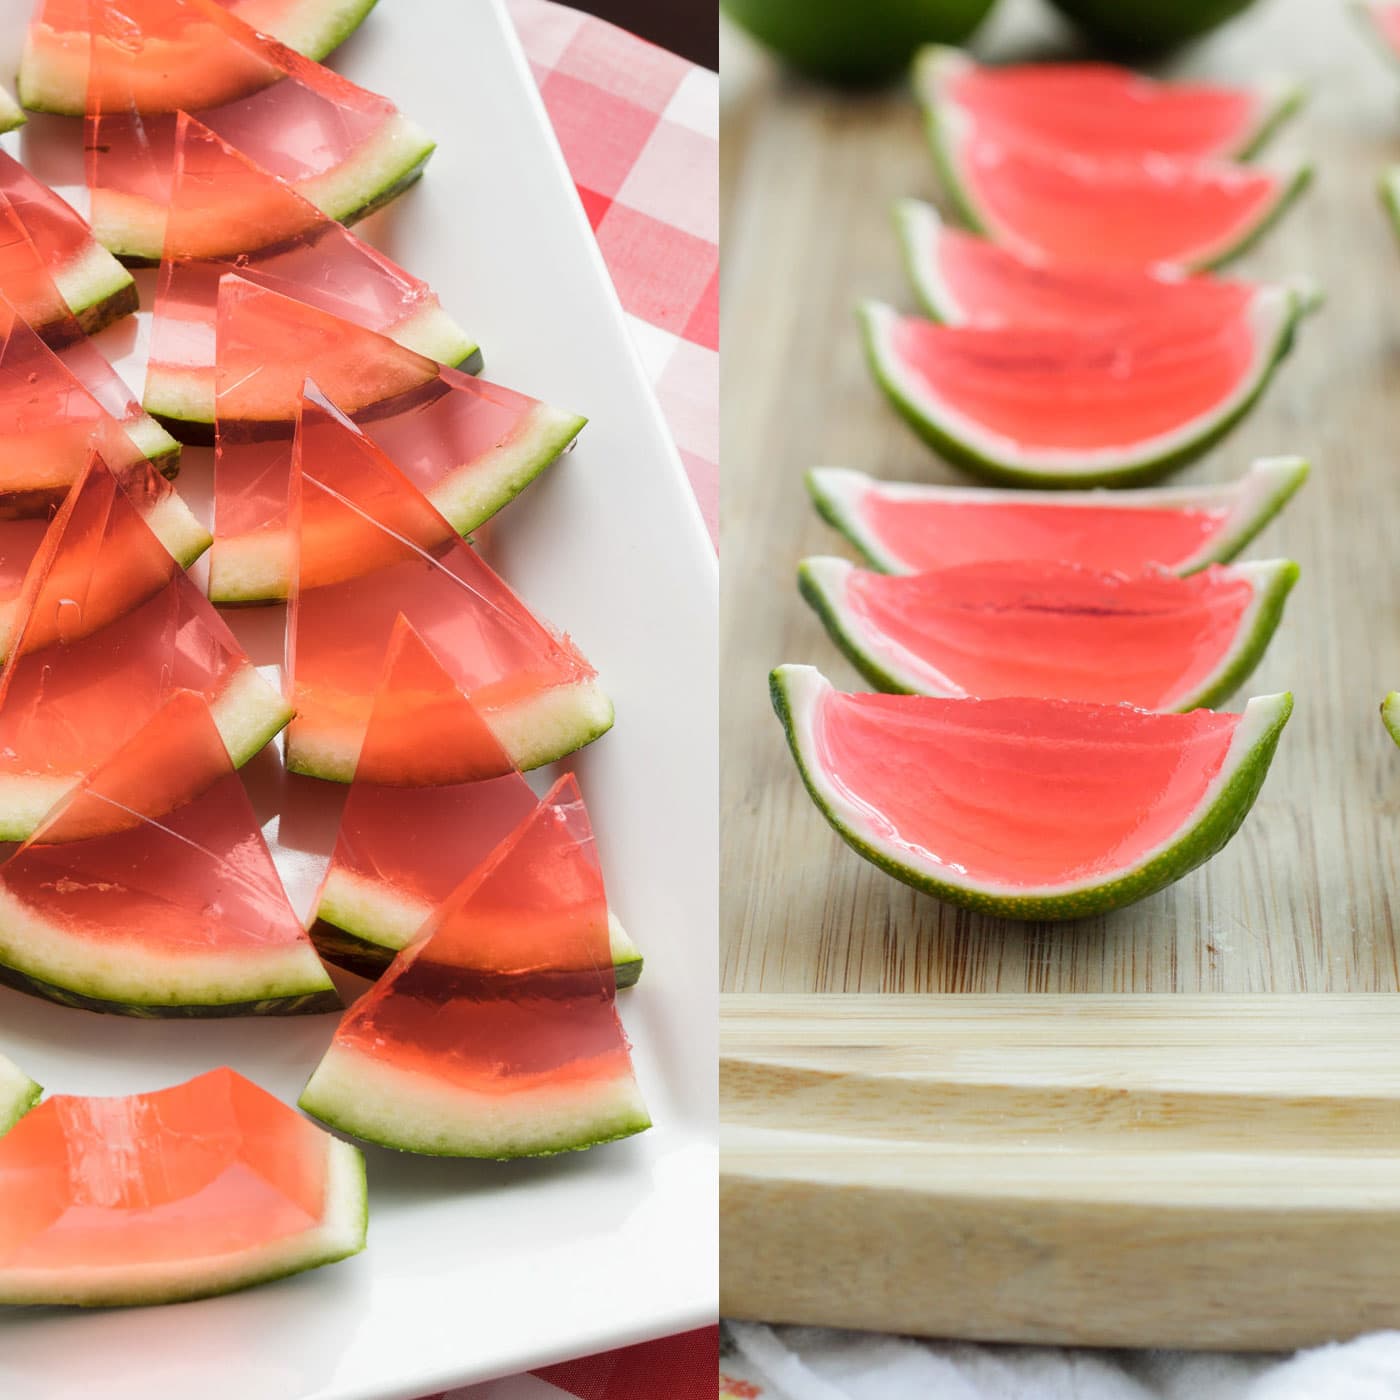 Watermelon Jello Shots 2 Ways To Make The Perfect Watermelon Jello Shots,Buy An Orchid Near Me